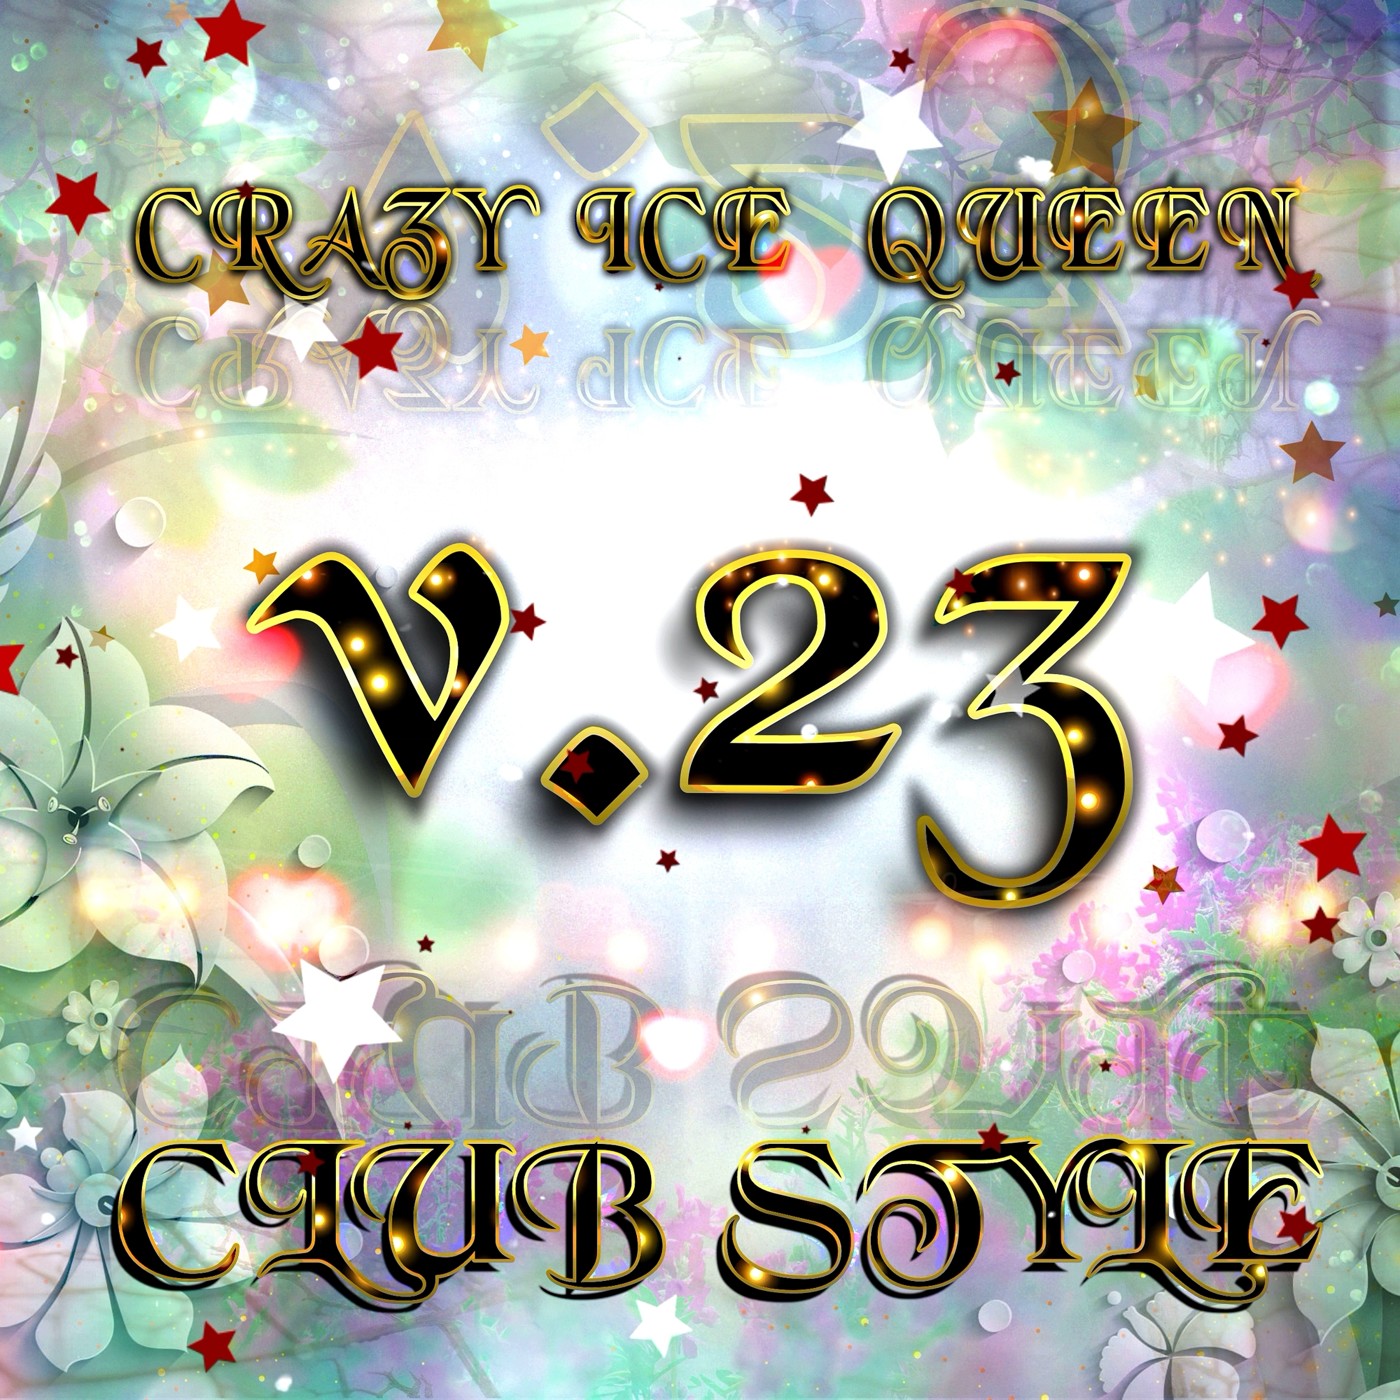 DJ CRAZY ICE QUEEN - CLUB STYLE v.23